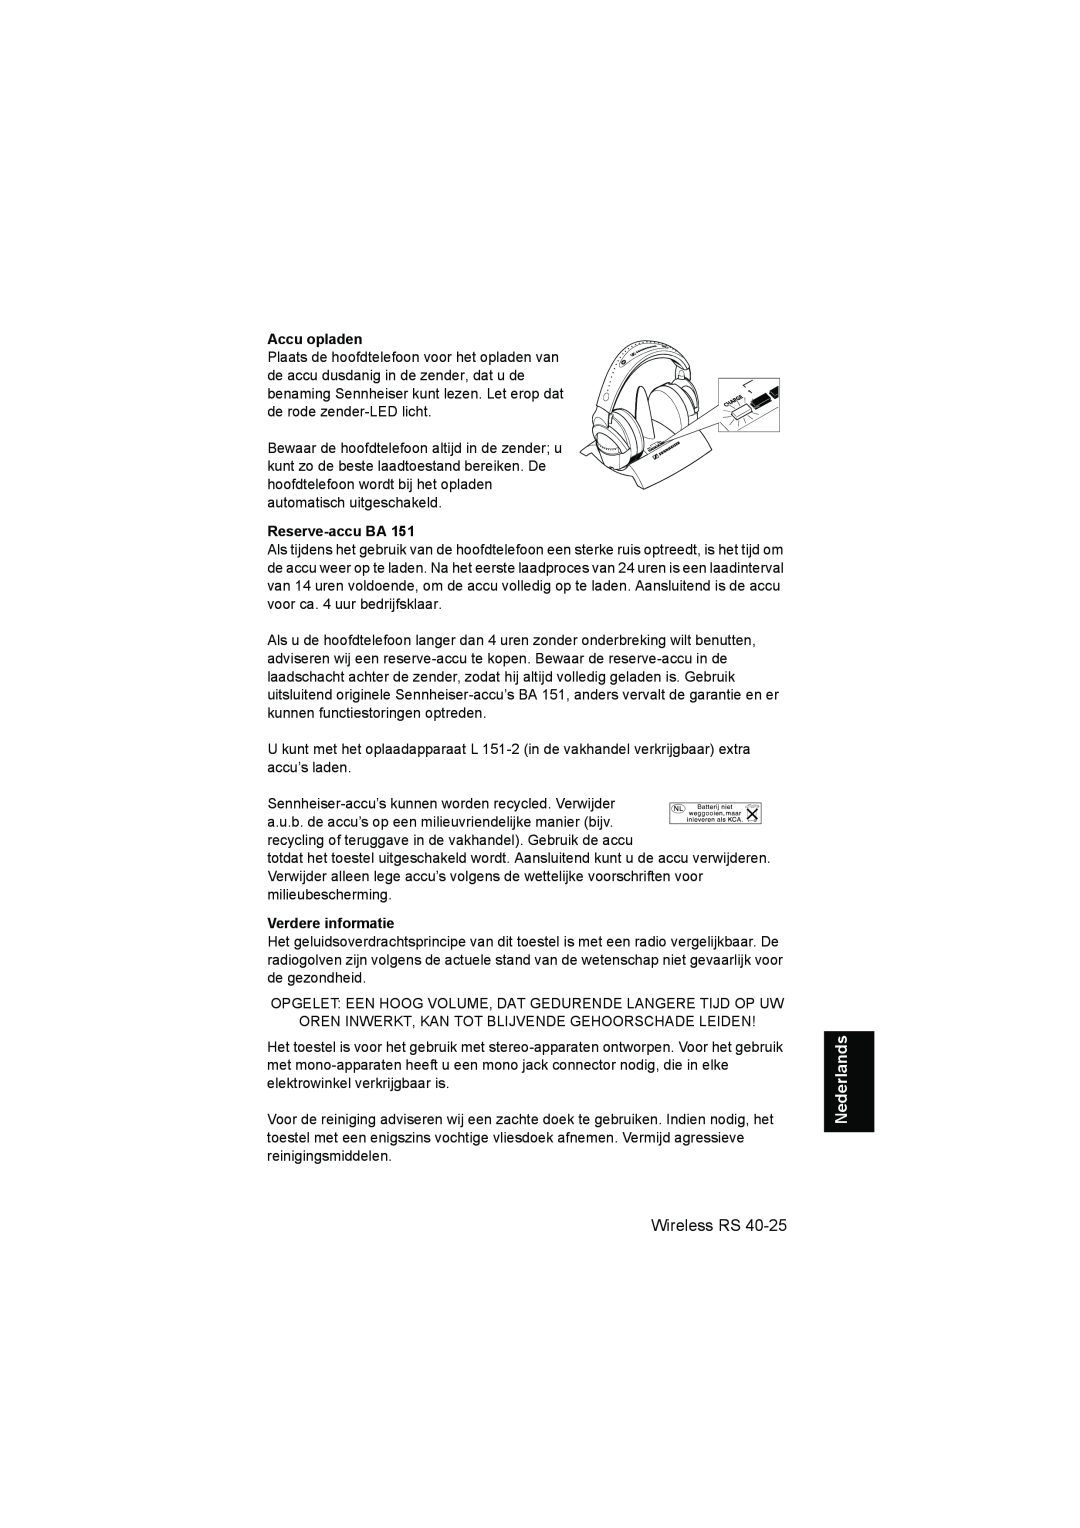 Sennheiser RS 40 instruction manual Accu opladen, Reserve-accuBA, Verdere informatie, Nederlands, Wireless RS 